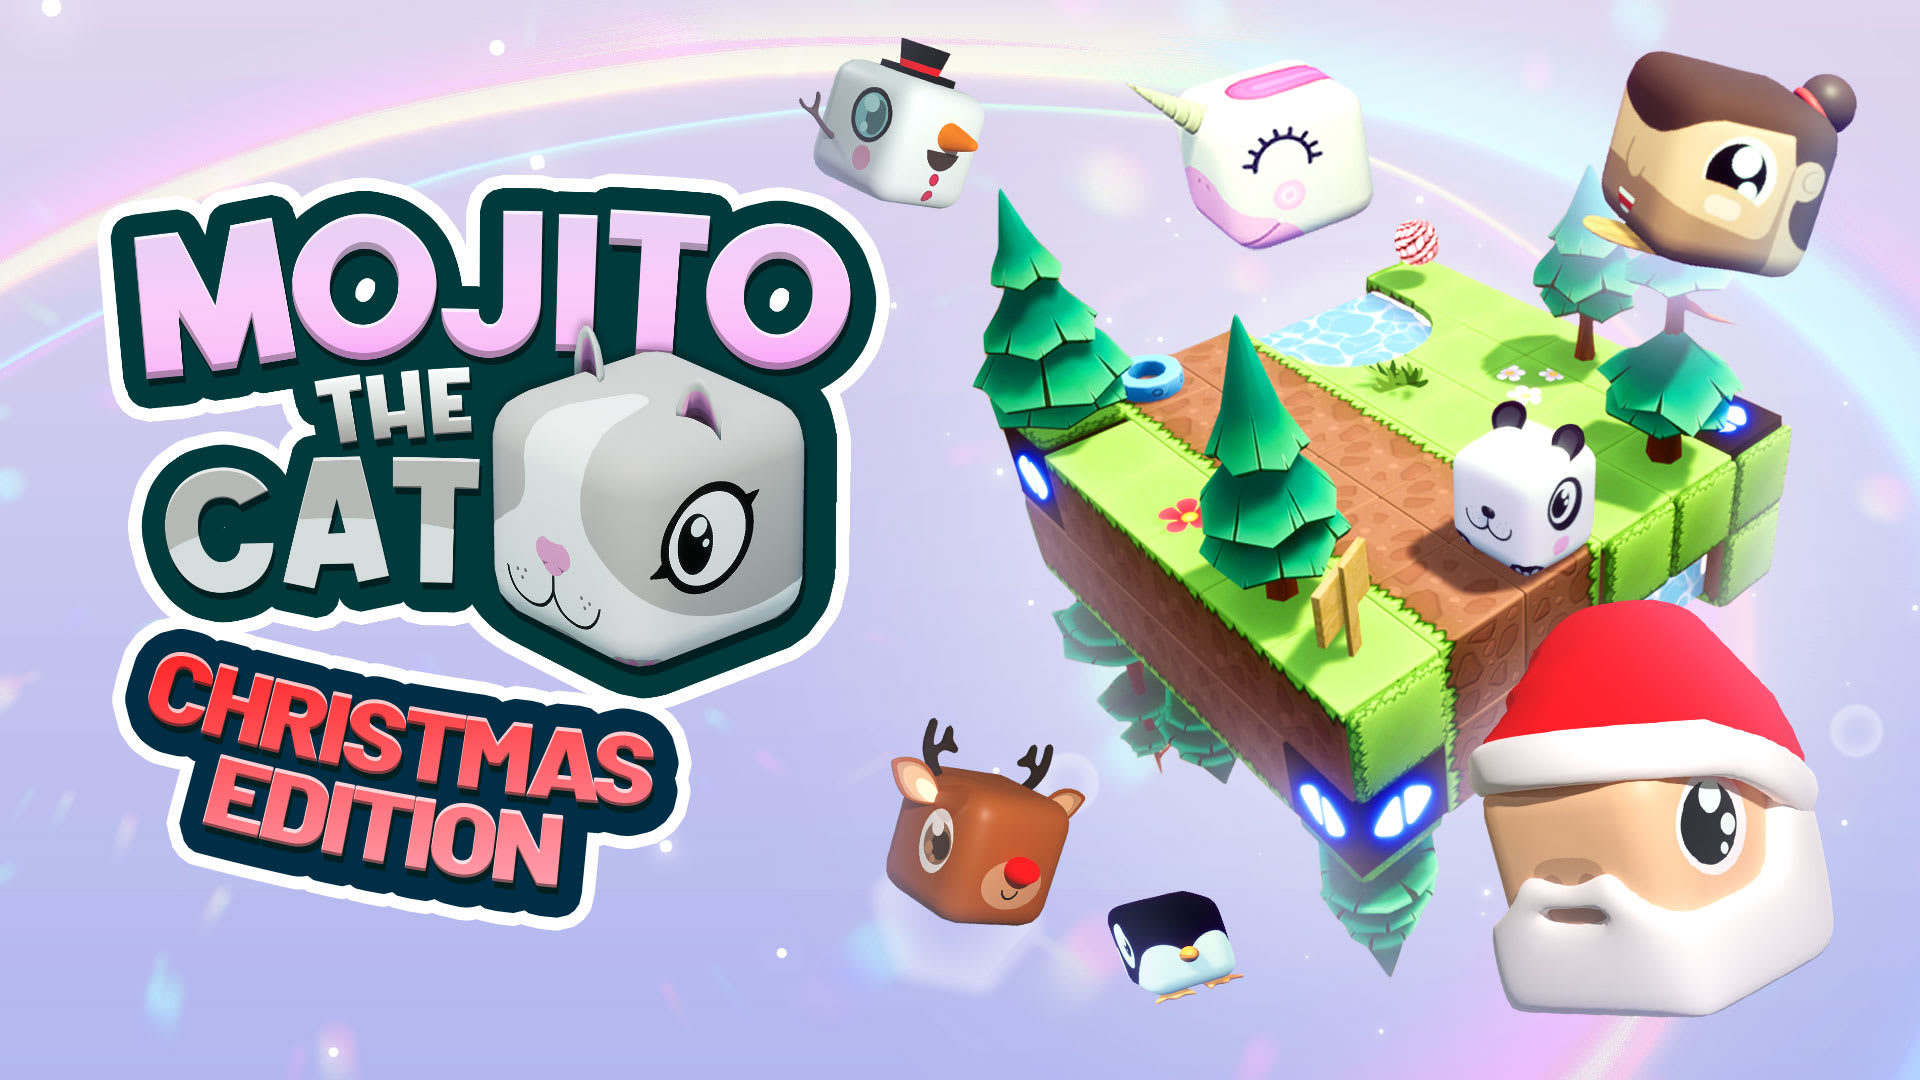 Mojito the Cat Christmas Edition